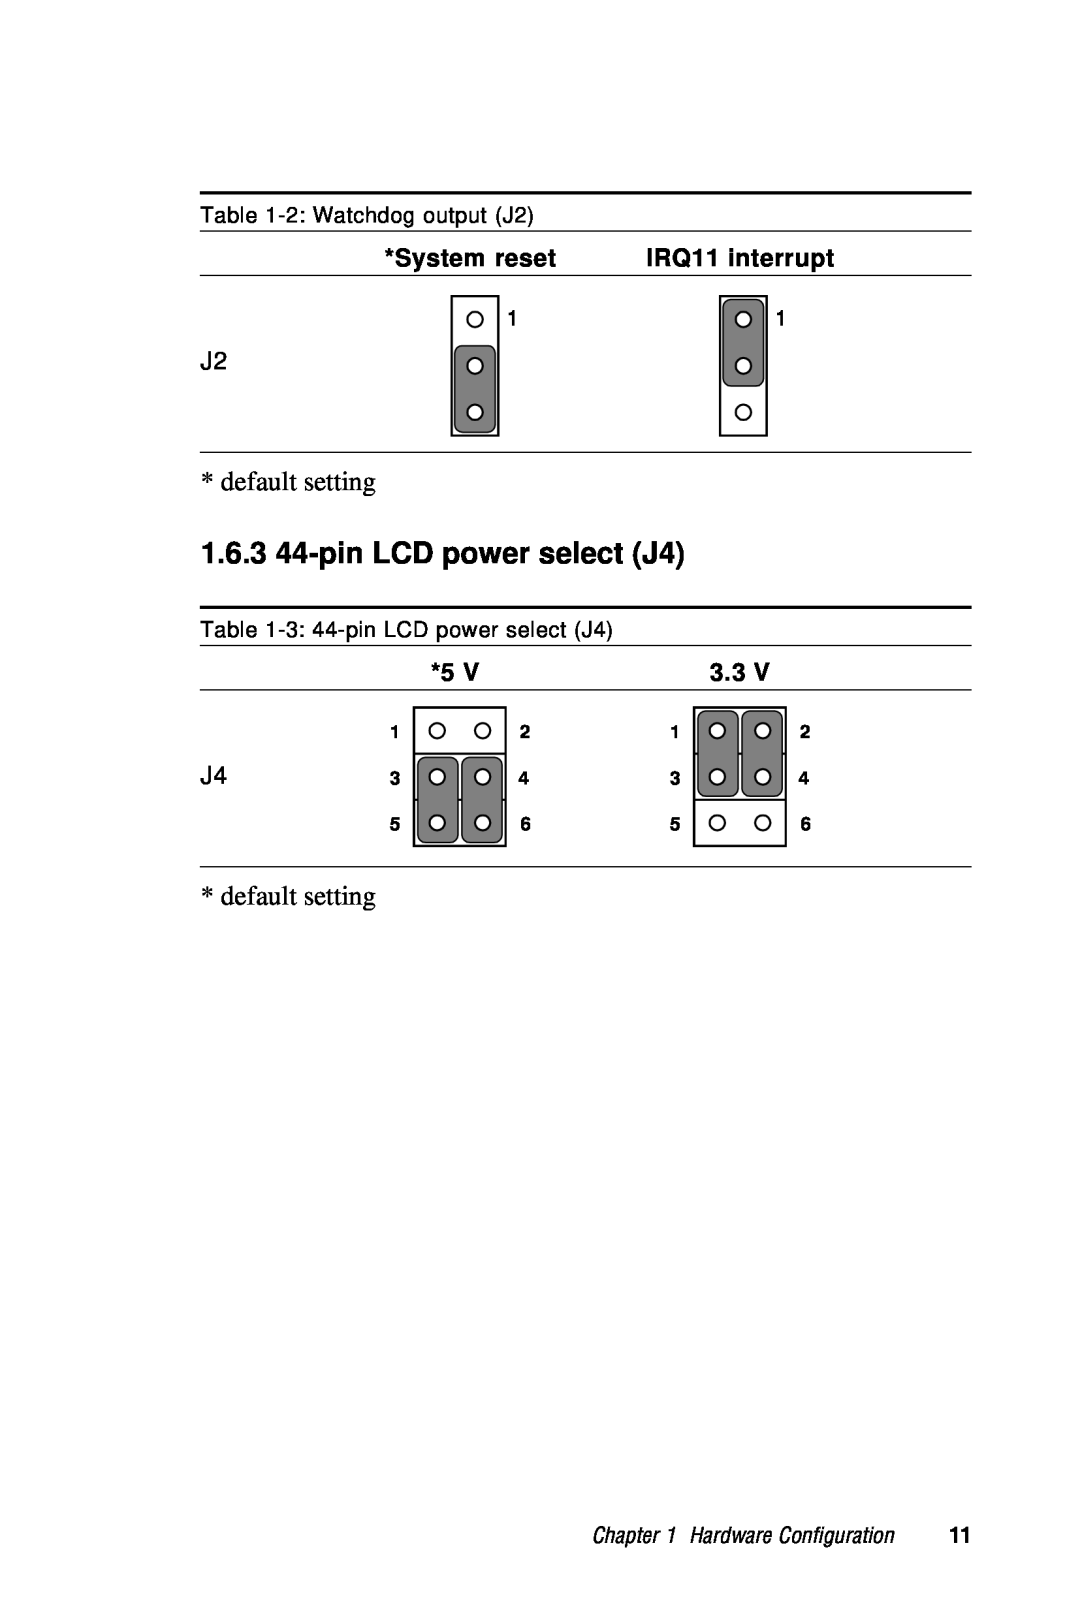 Advantech PCA-6359 user manual 1.6.3 44-pin LCD power select J4, System reset, IRQ11 interrupt, Hardware Configuration 